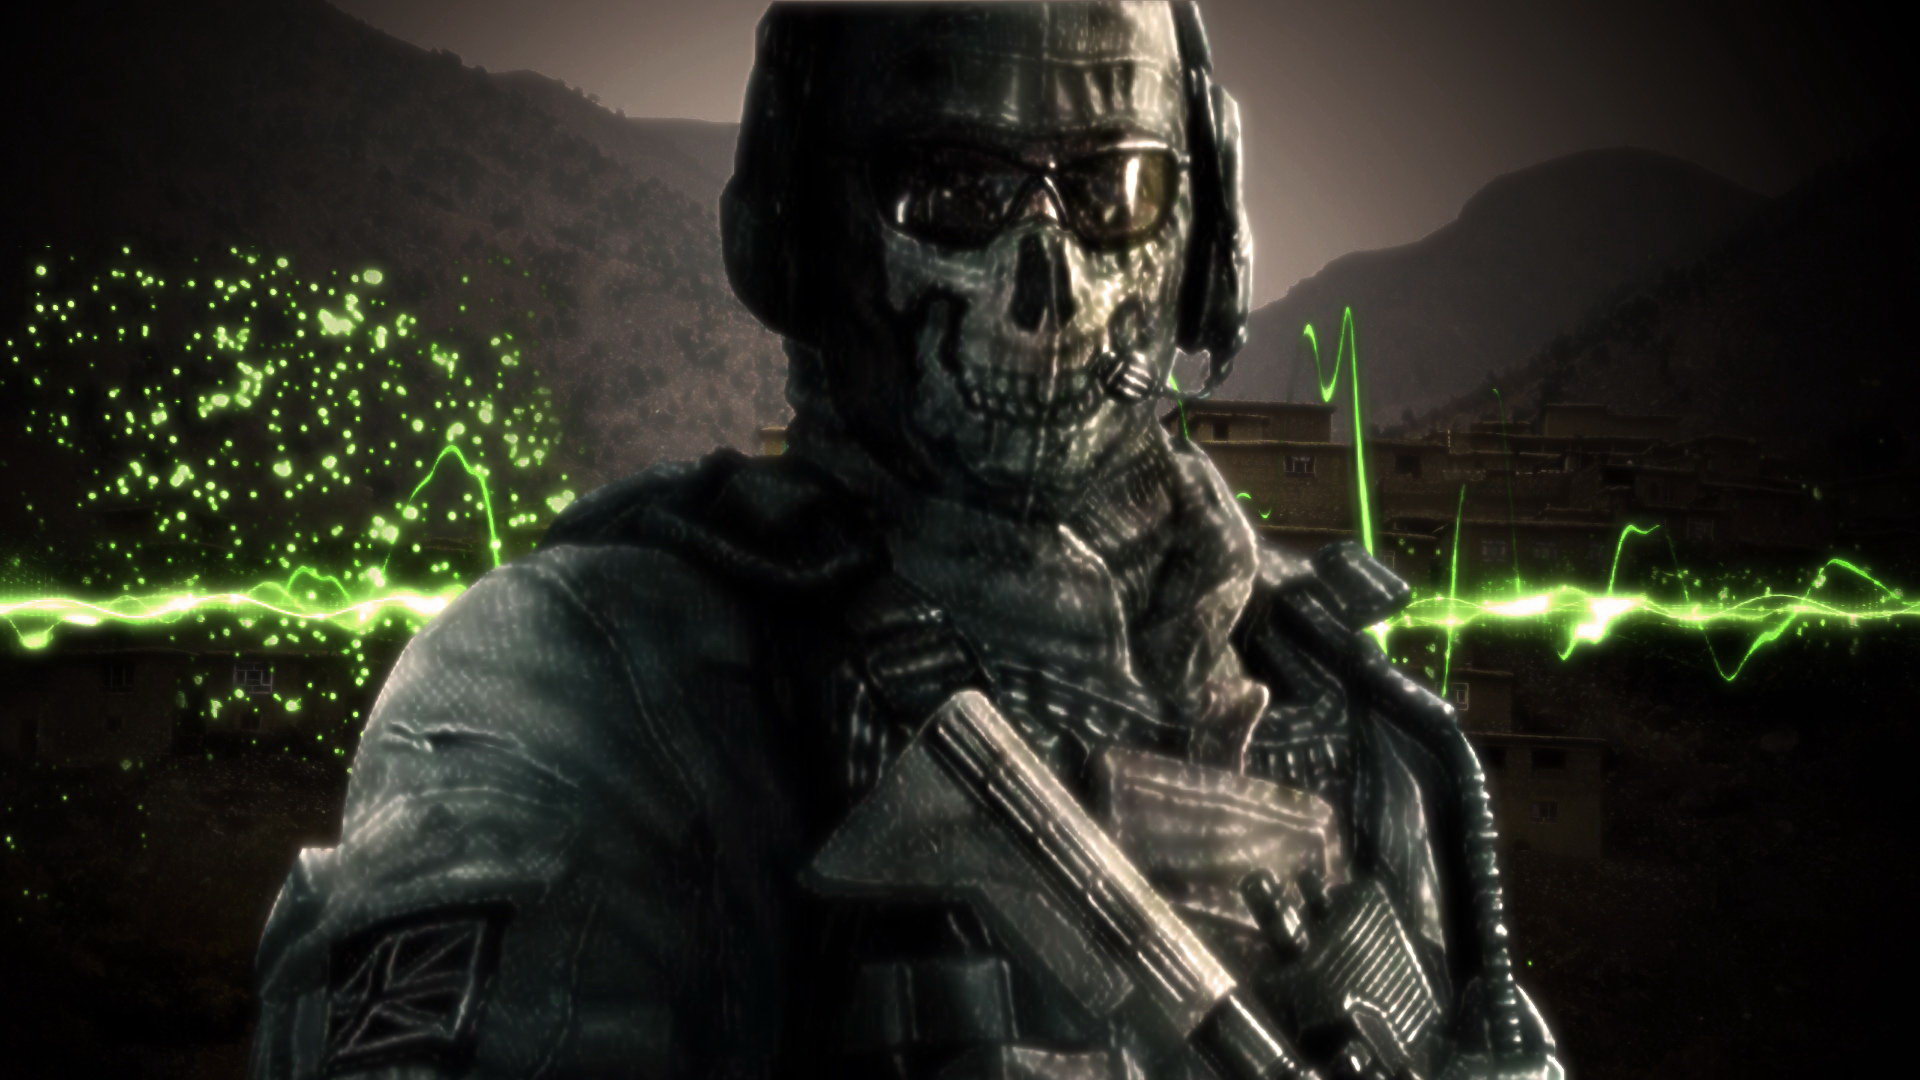 Колда гоуст. Call of Duty Modern Warfare 2 гоуст. Саймон "гоуст" Райли. Ghost Call of Duty Modern Warfare 2. Гоуст из калл оф дьюти.